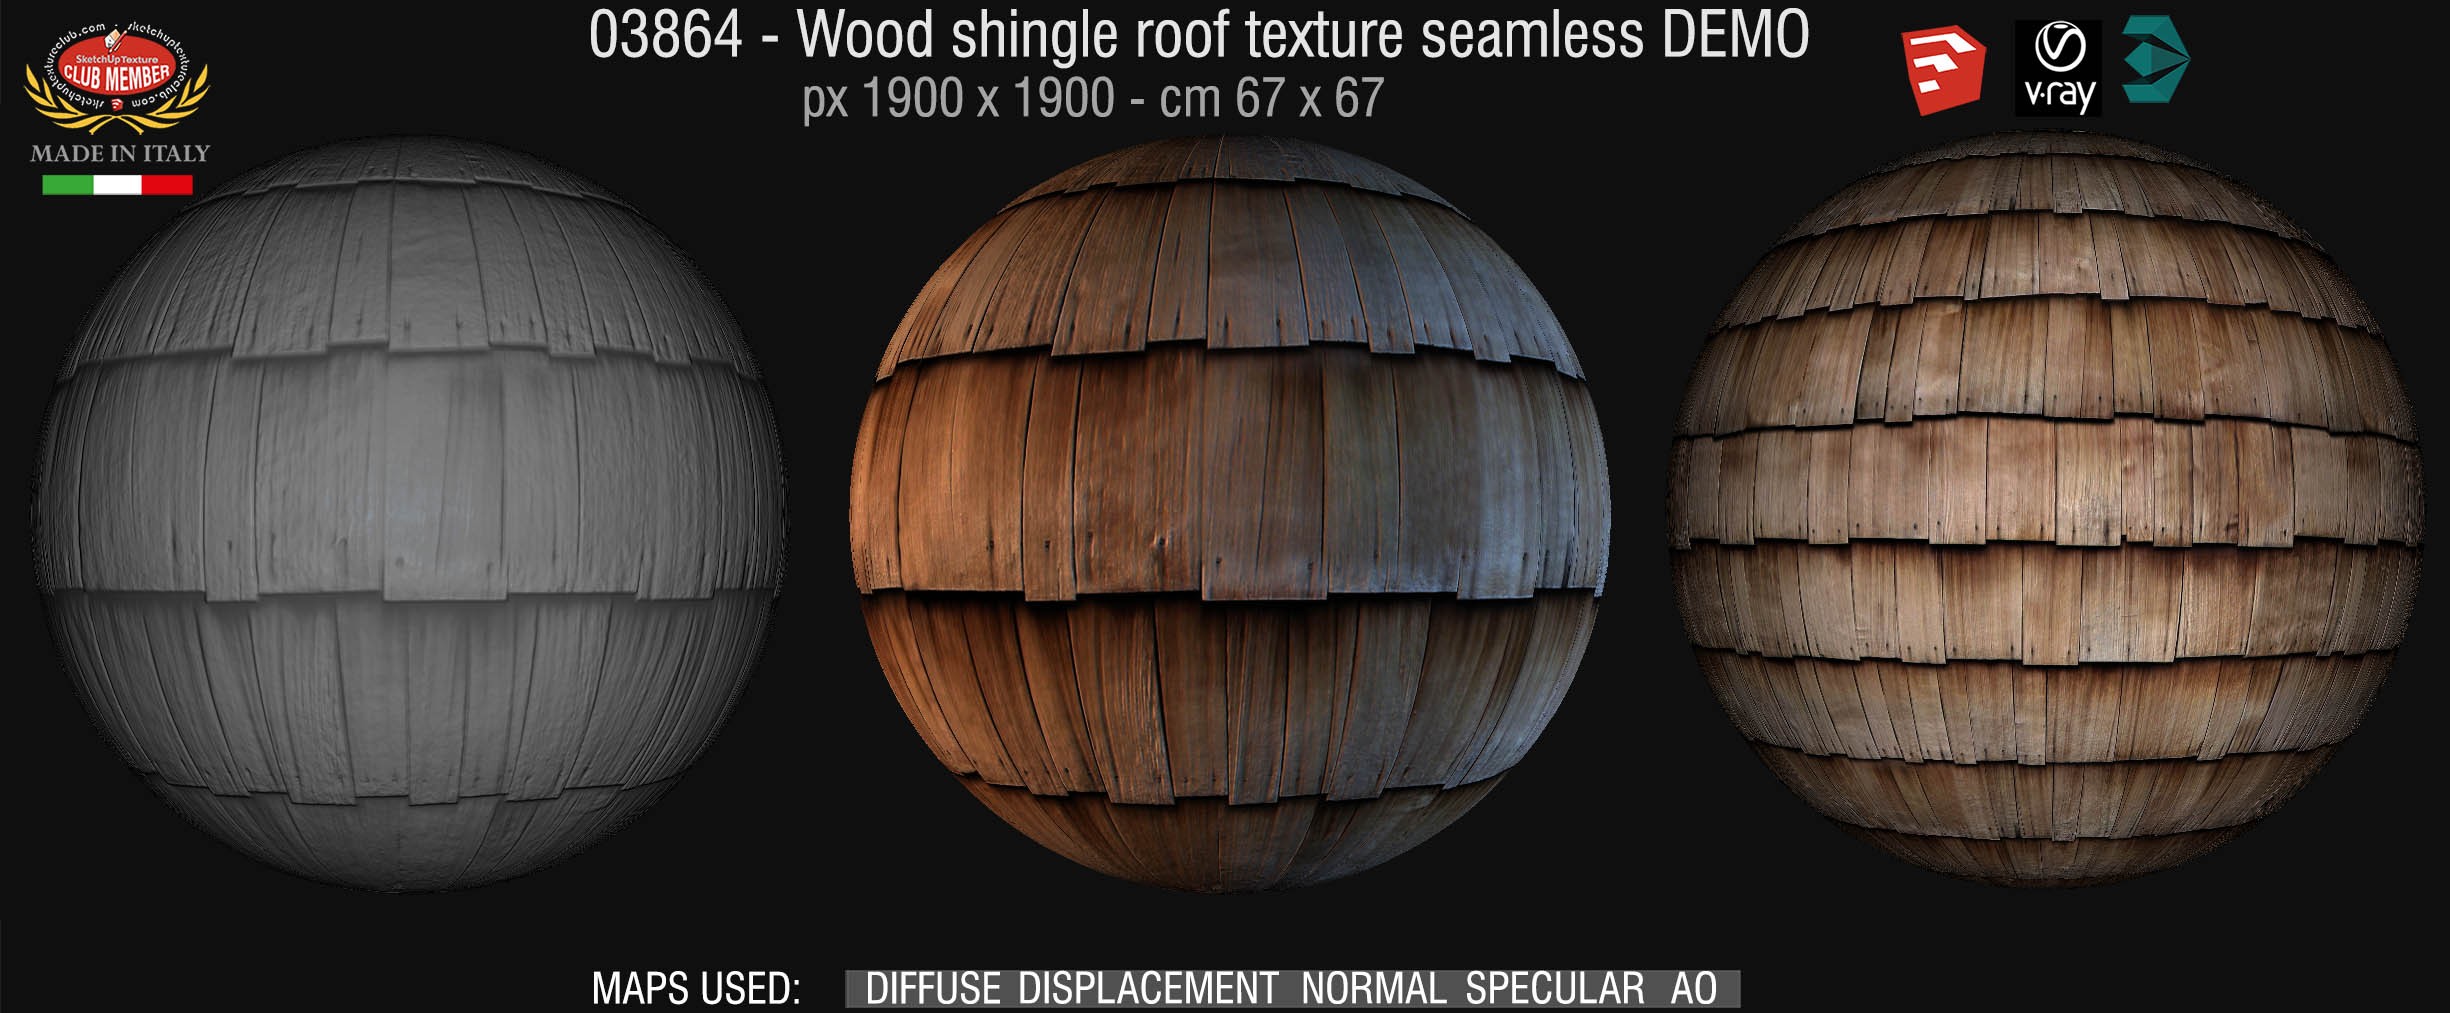 03864 Wood shingle roof texture seamless + maps DEMO